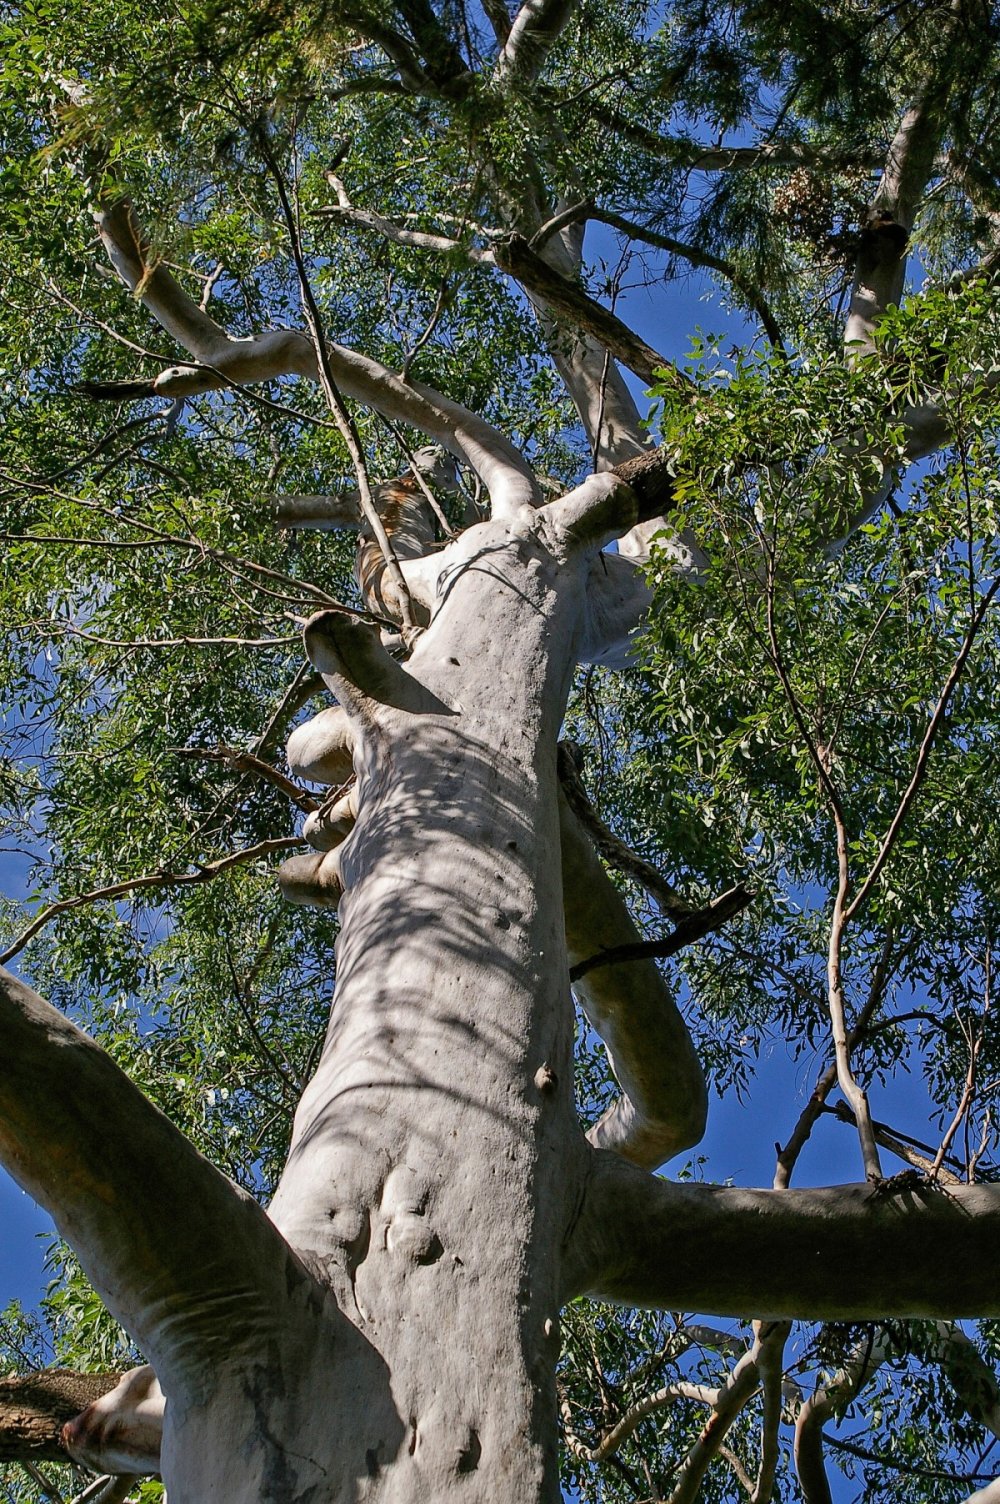 Eucalyptus Grandis